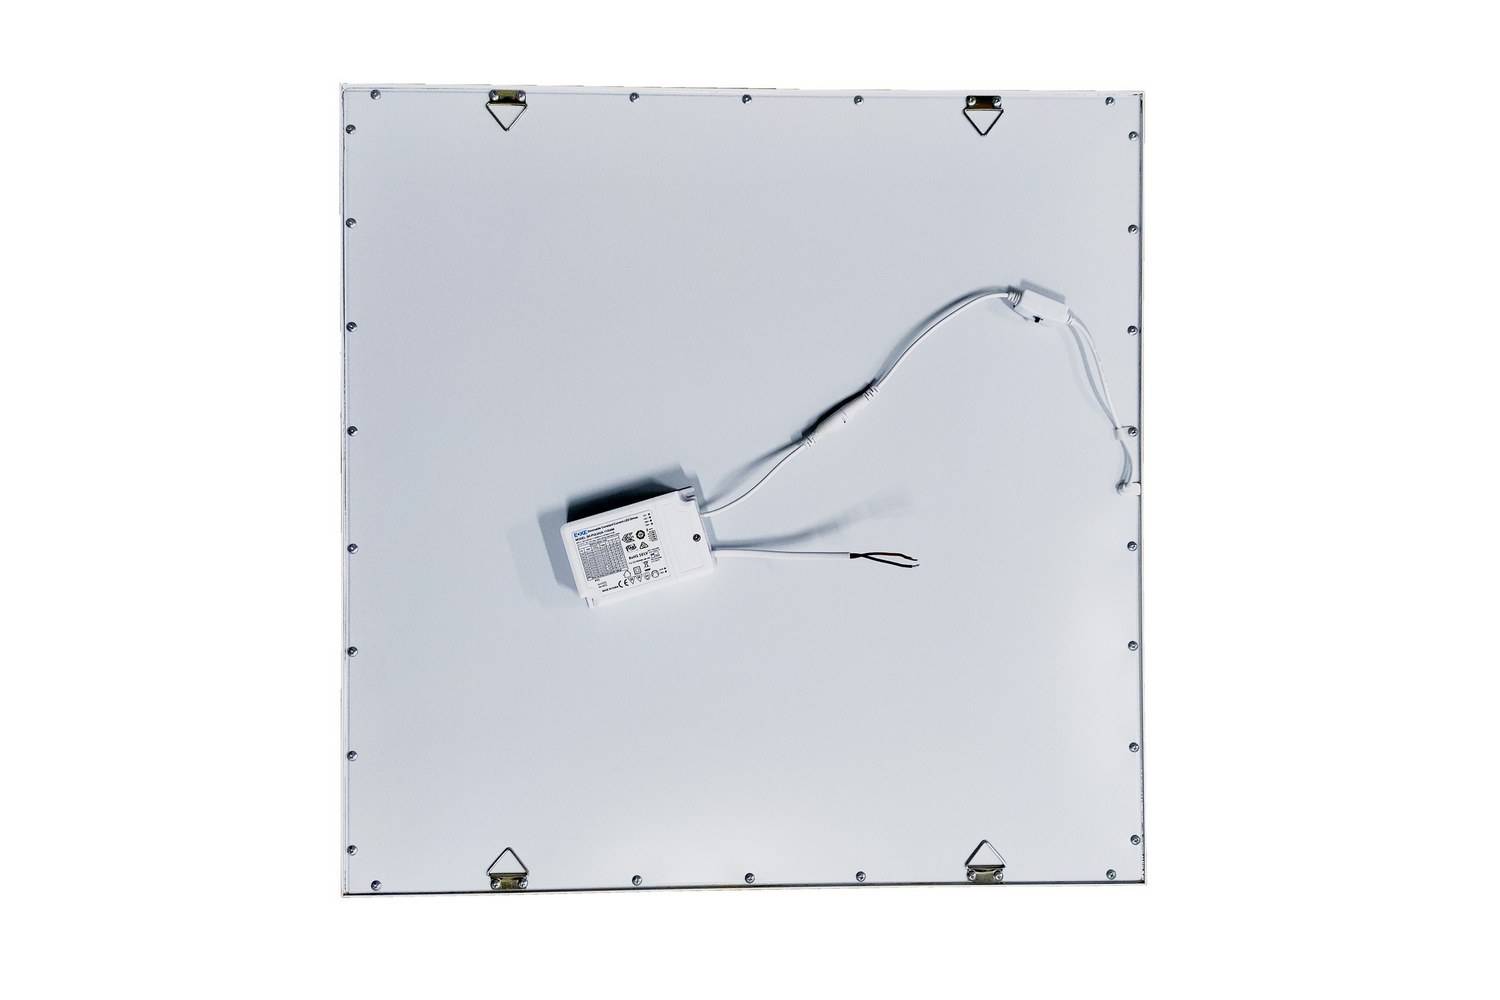 CCT LED panel 60x60 dimmable edge-lit panel 600x600 ultra-thin led flat panel light 2